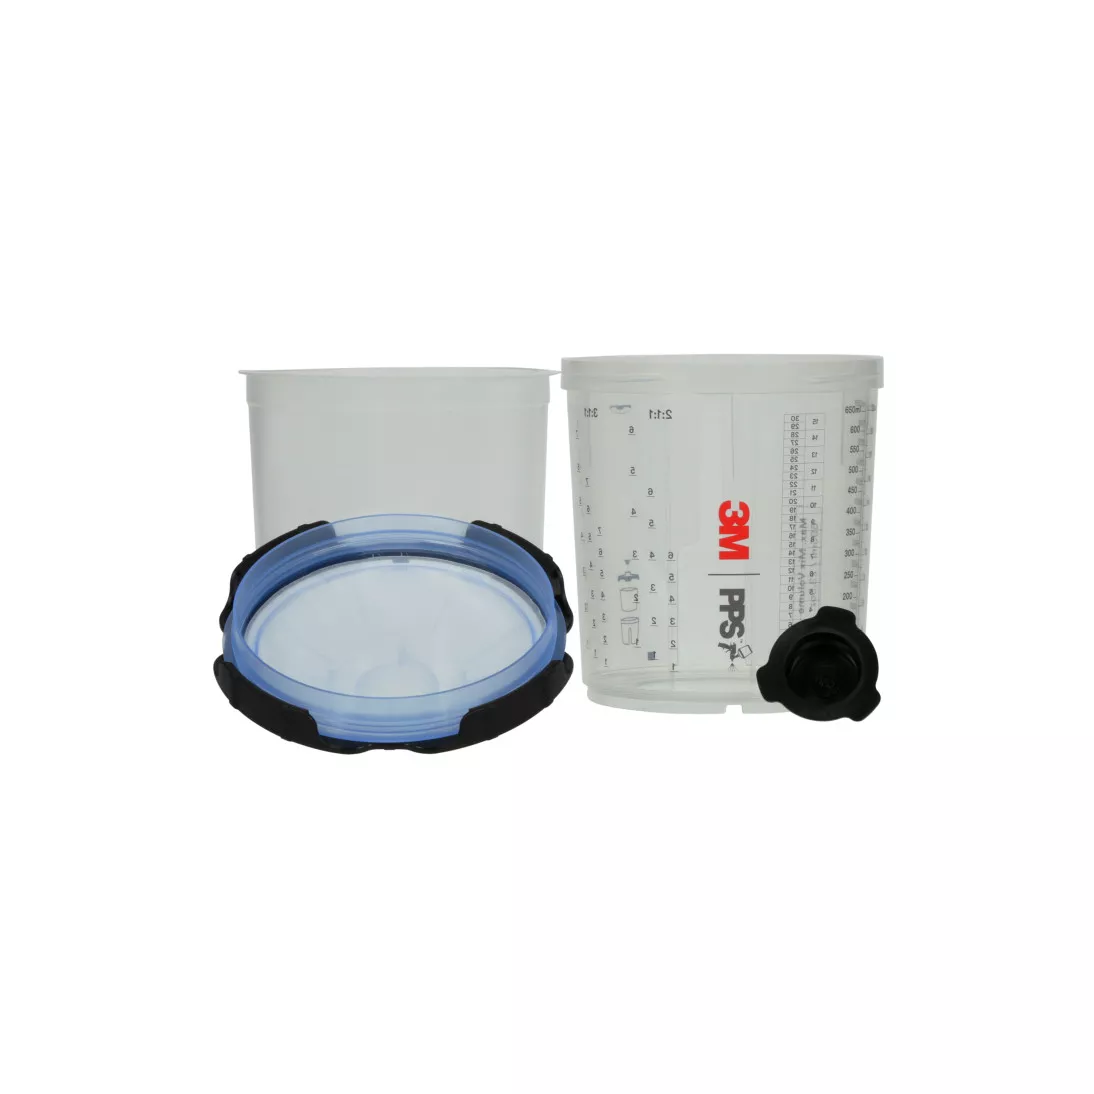 3M™ PPS™ Series 2.0 Spray Cup System Kit, 26301, Standard (22 fl oz, 650
mL), 125u Micron Filter, 1 kit per case